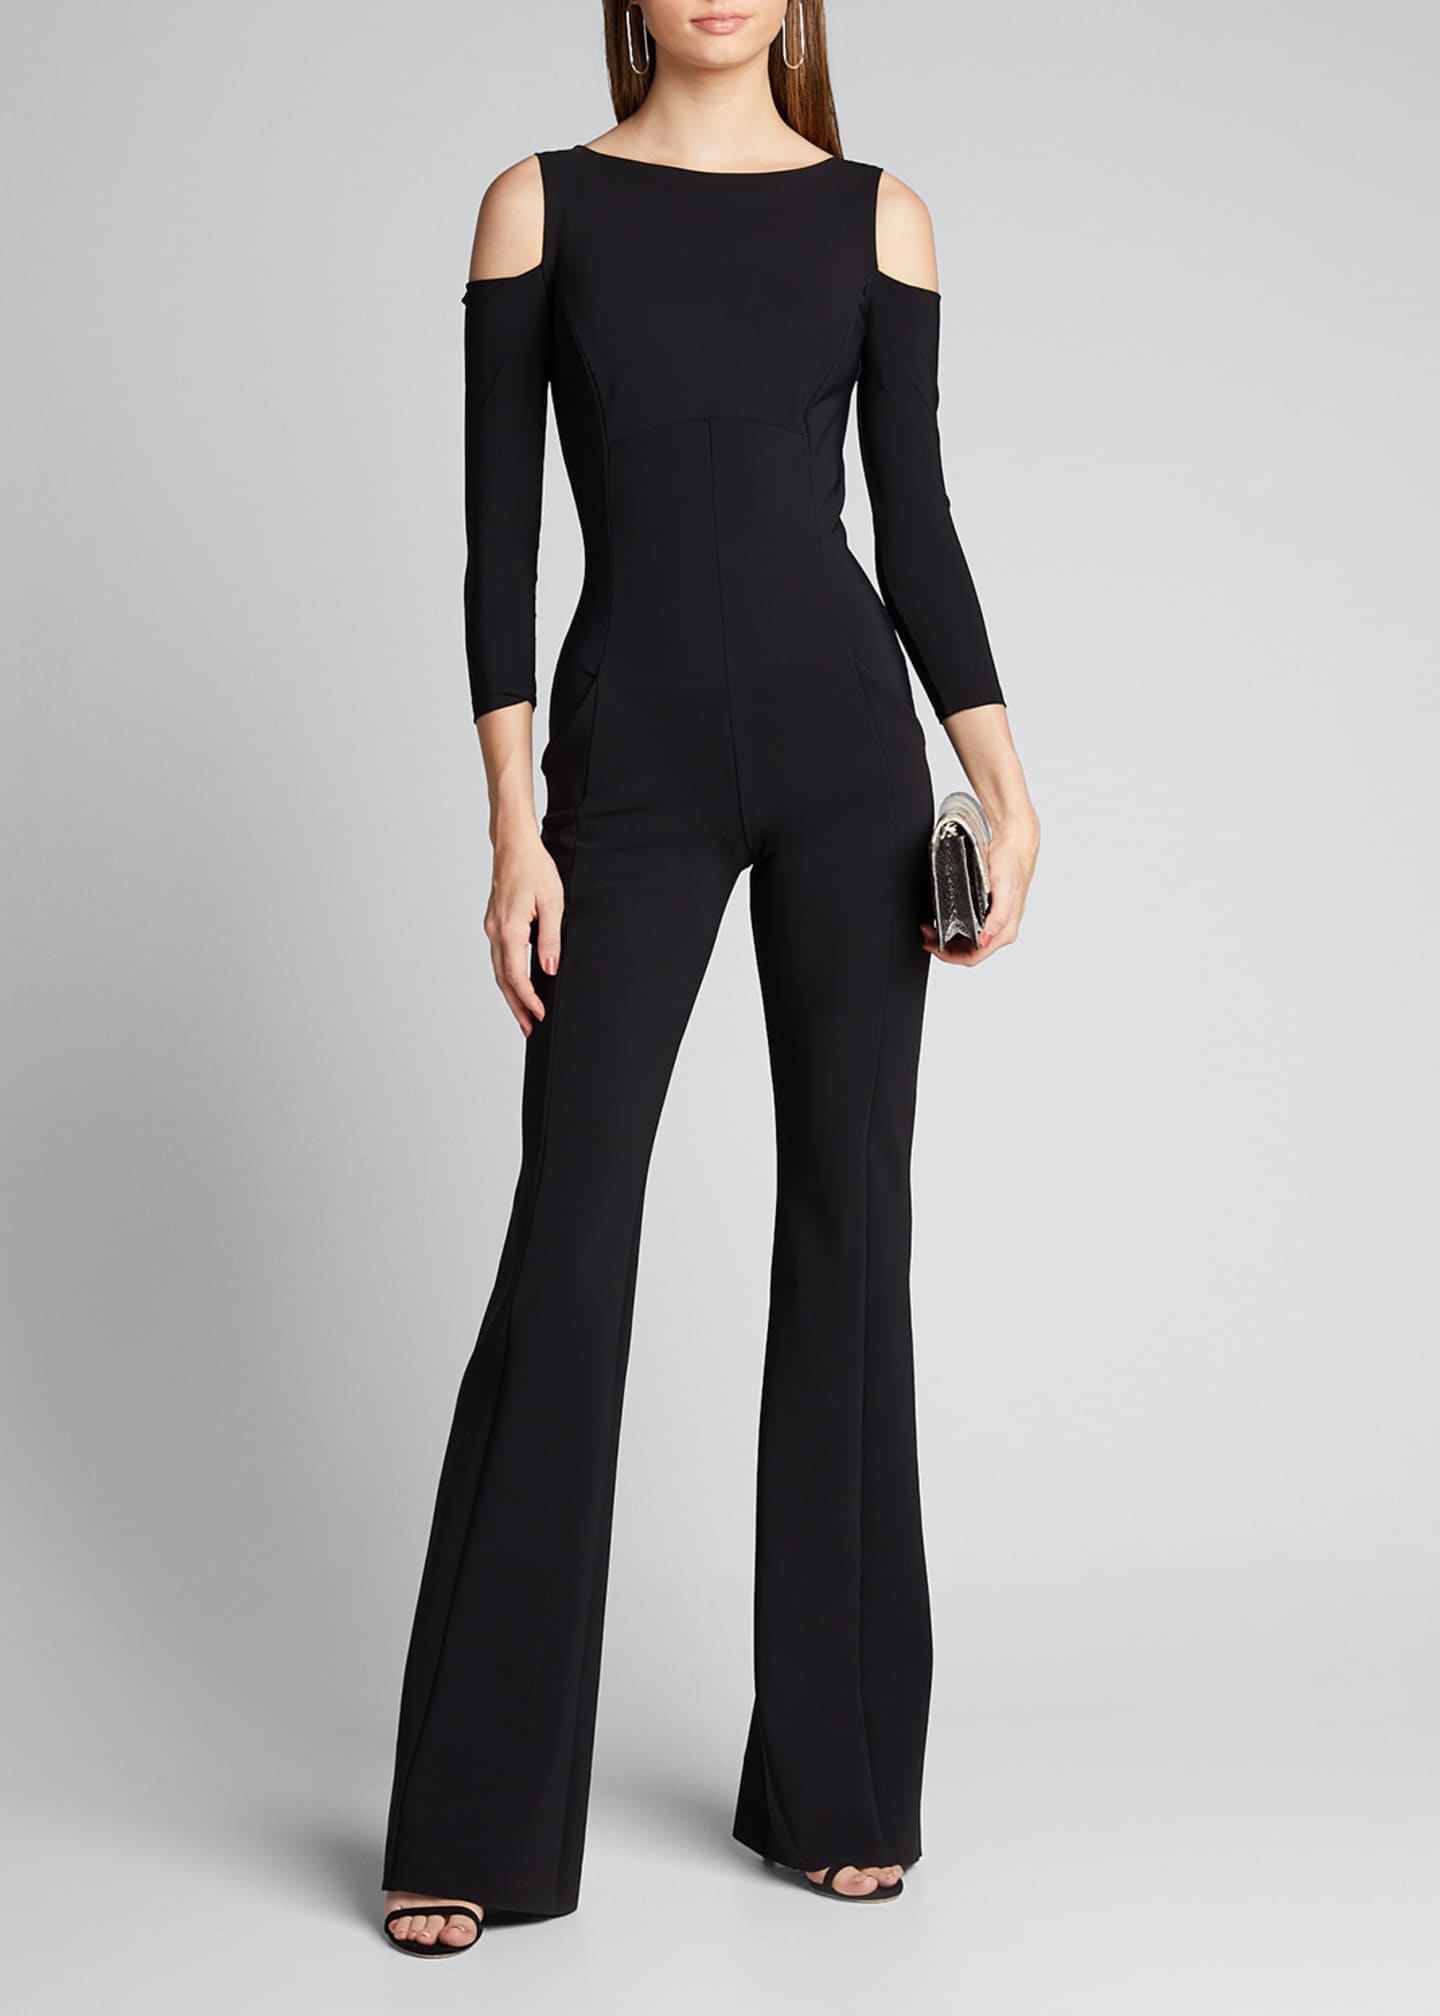 Michael Kors Collection Wool-Crepe Long-Sleeve Jumpsuit, Black